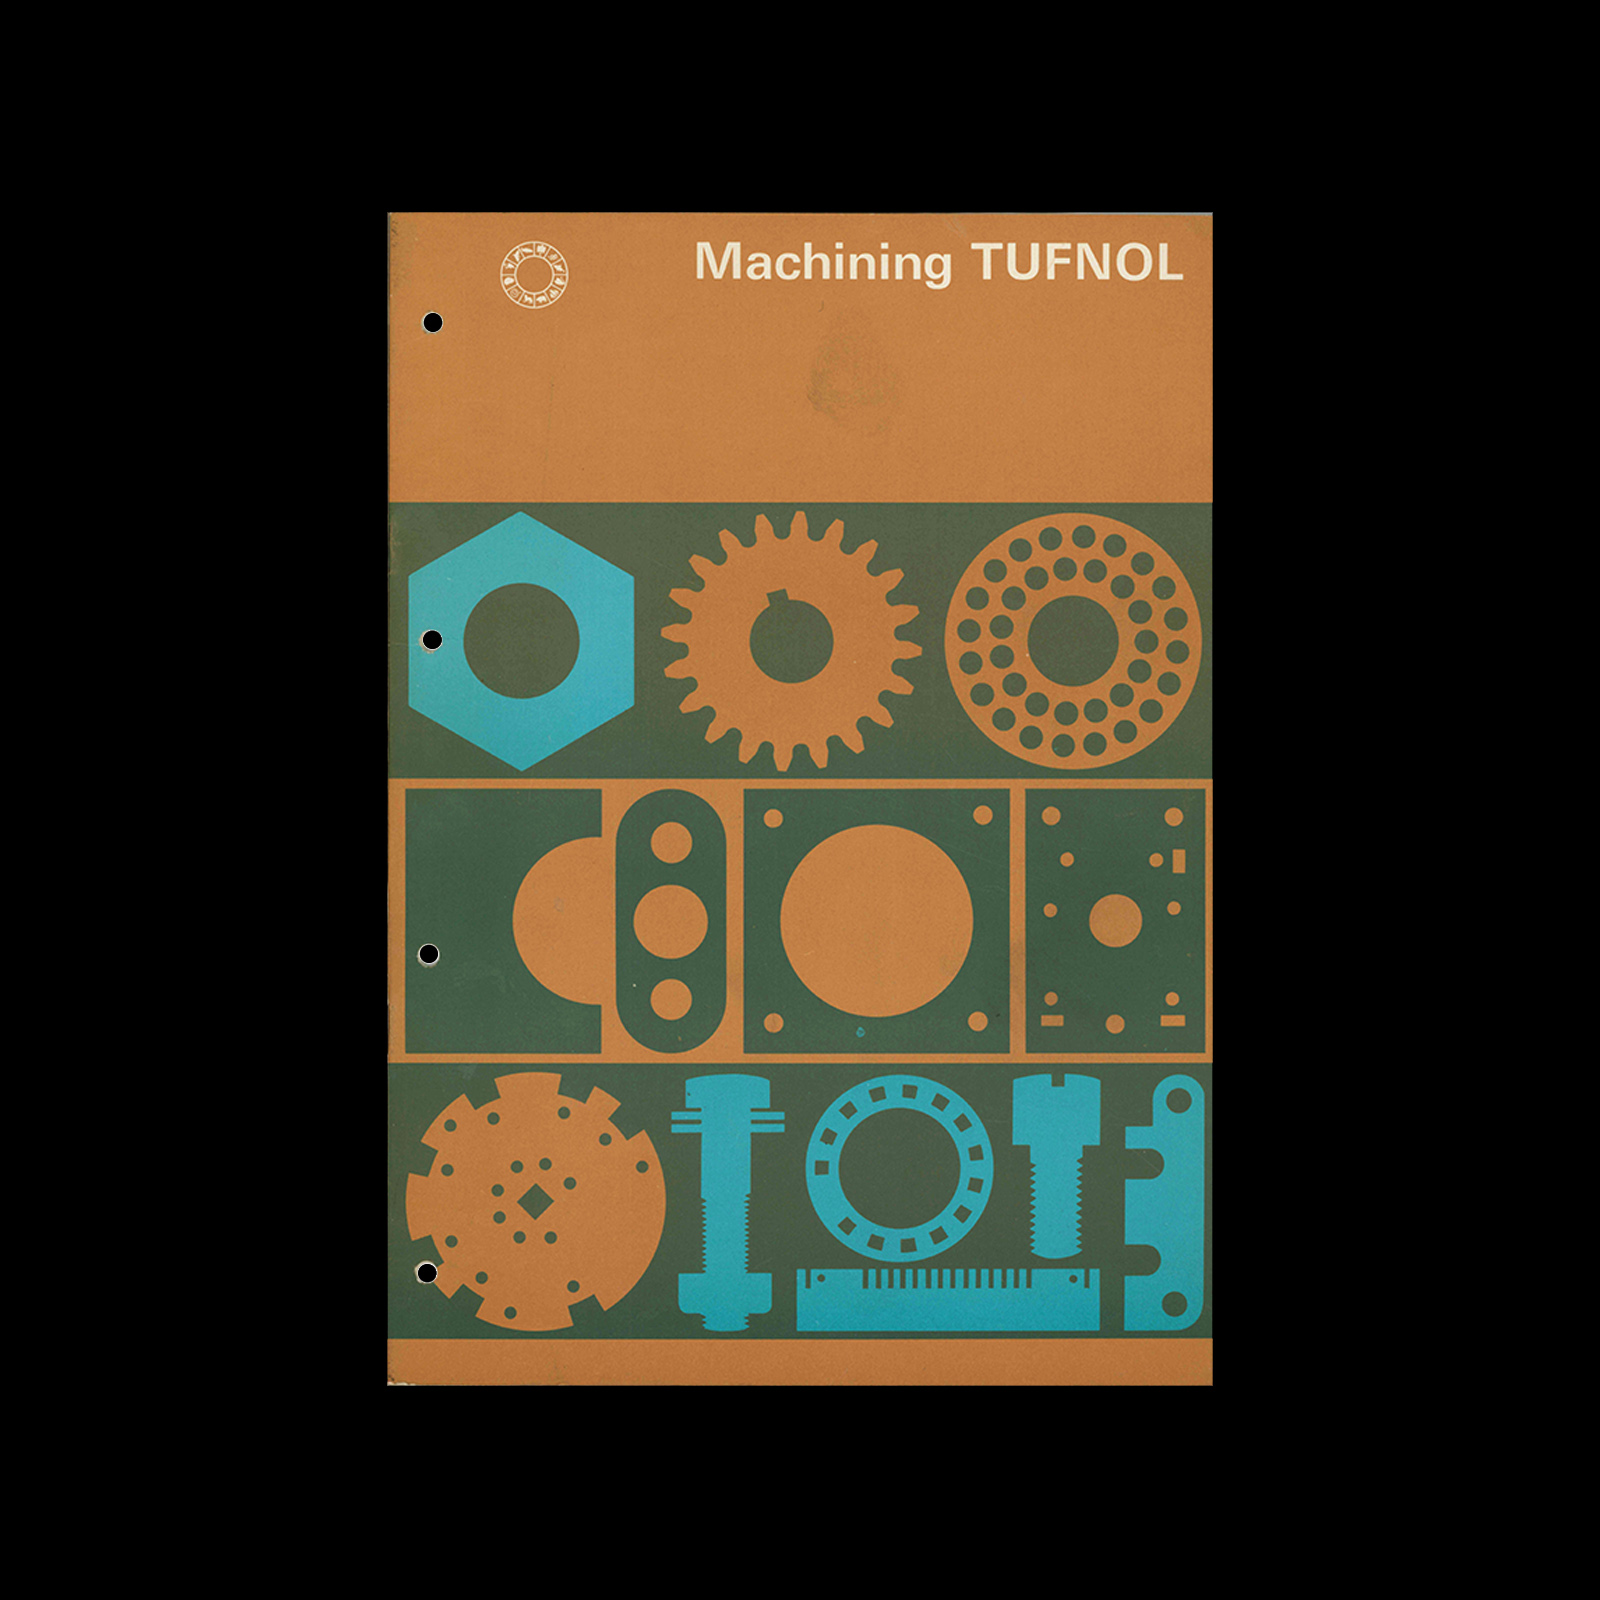 TUFNOL, Machining, Brochure, 1965. Design and print by The Kynoch Press